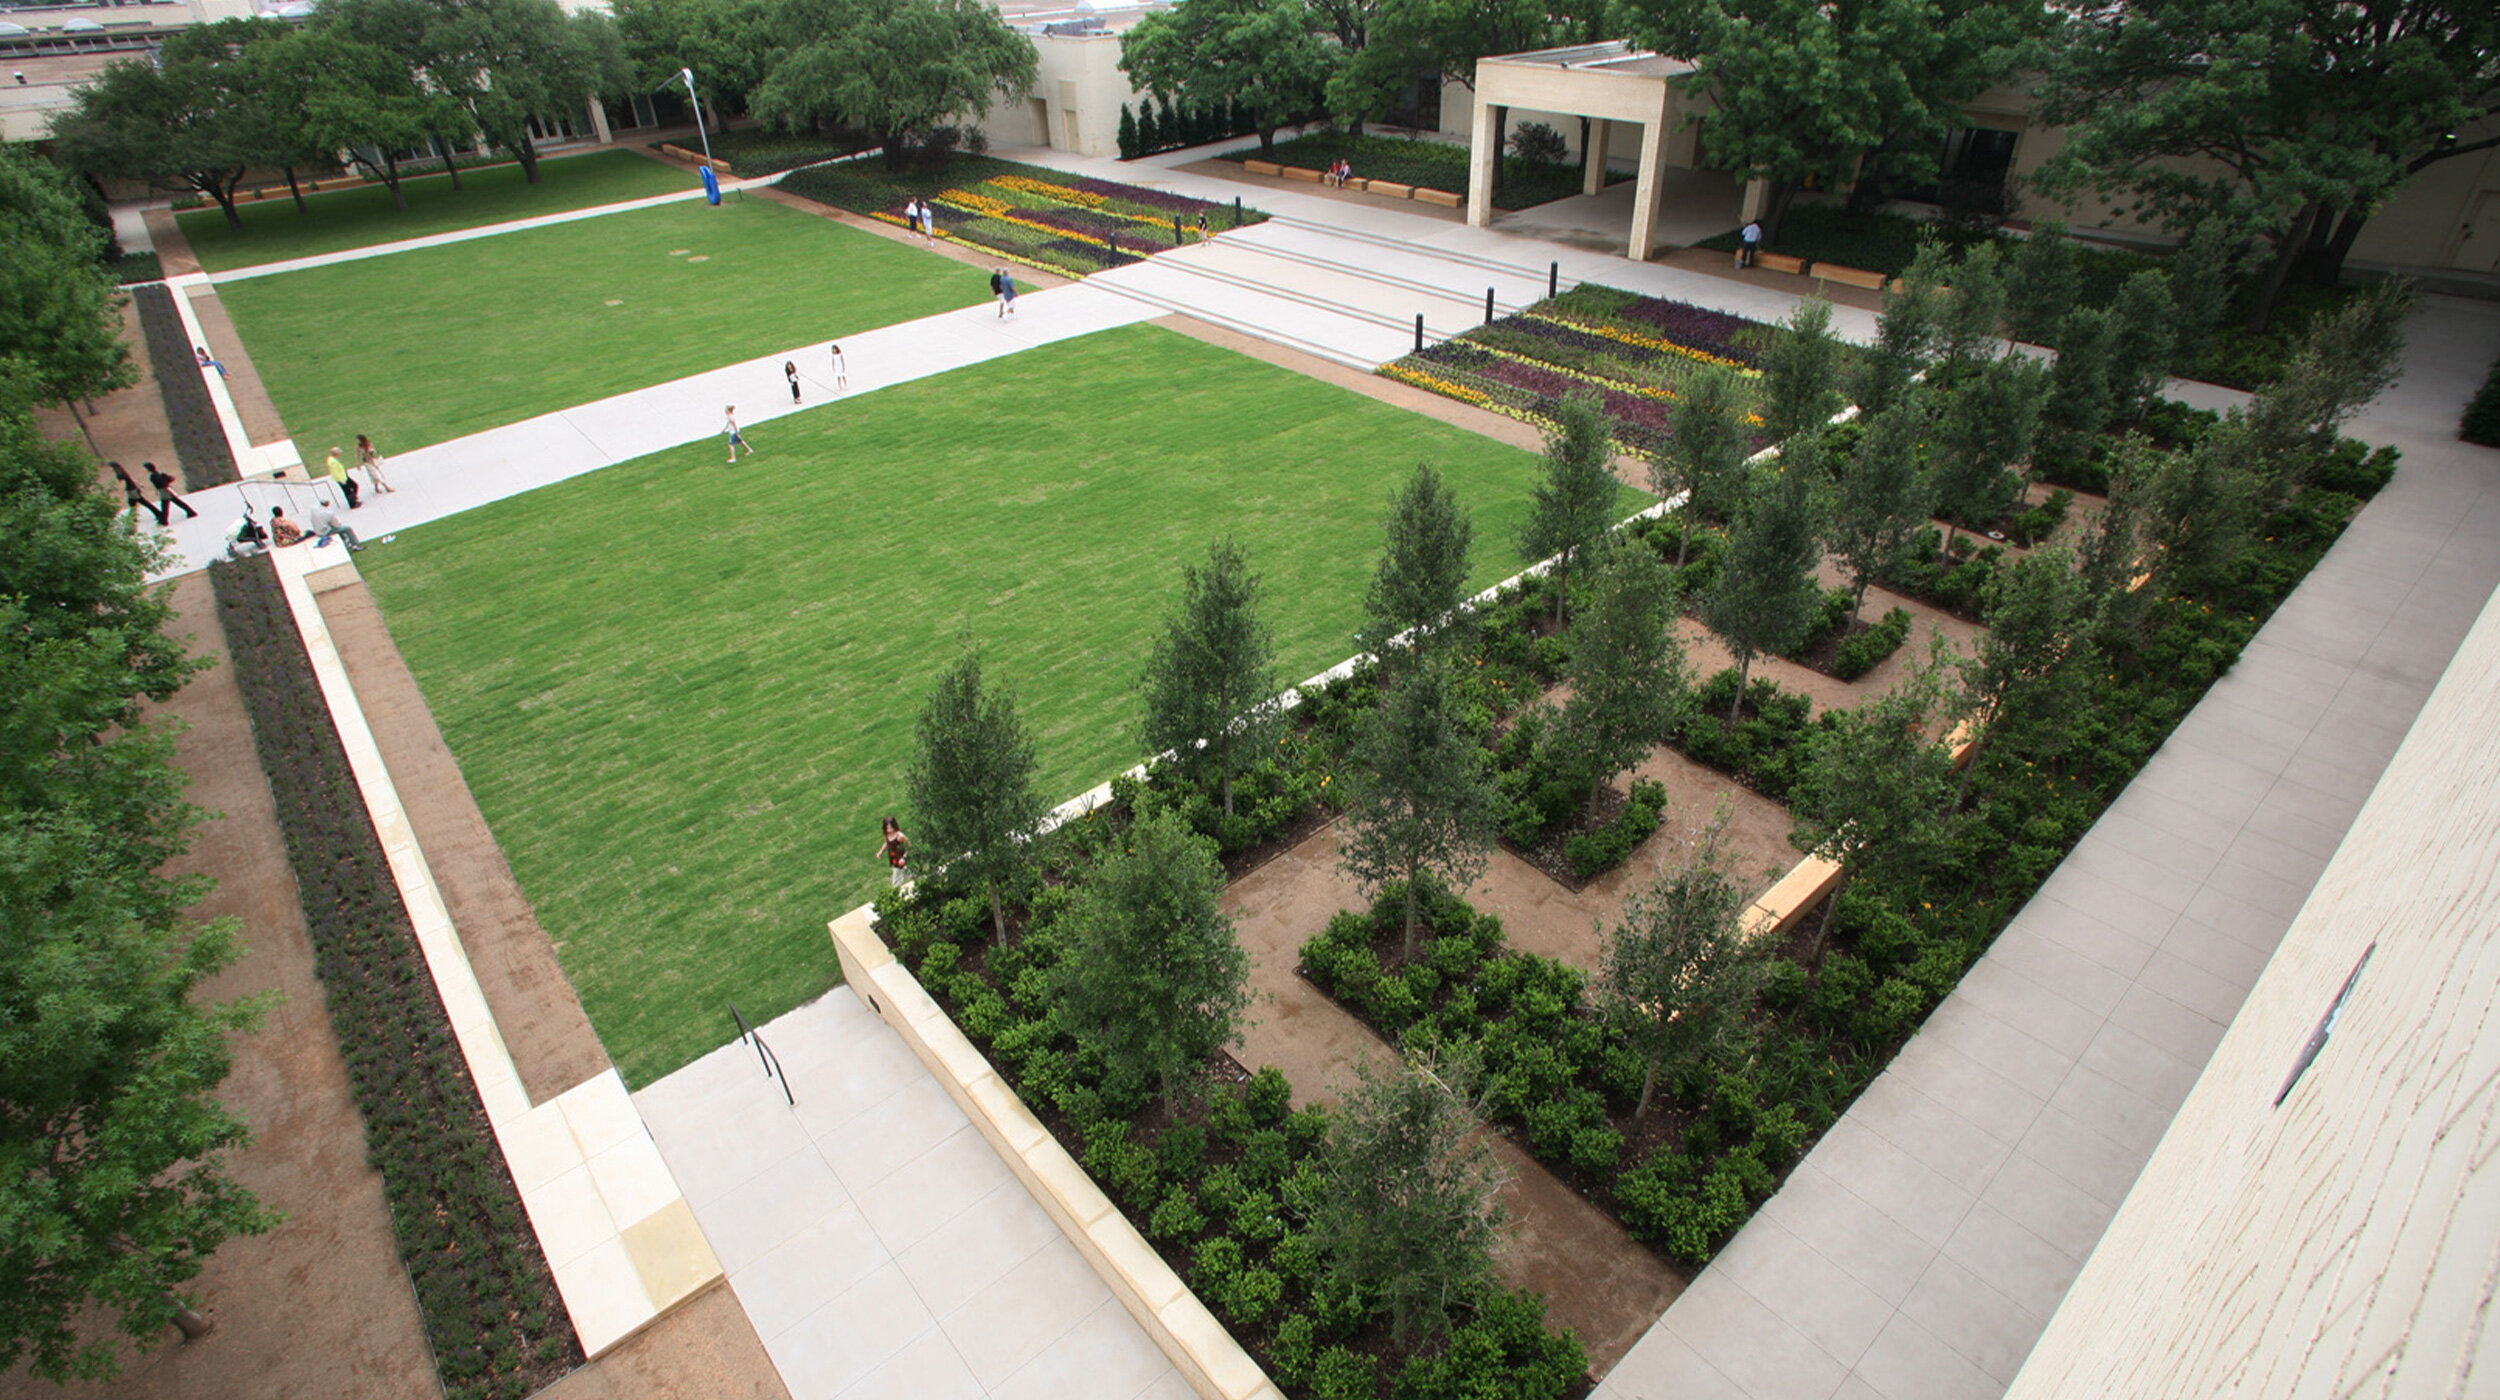 CenterPark at NorthPark Center (Dallas TX). Terraced flower beds